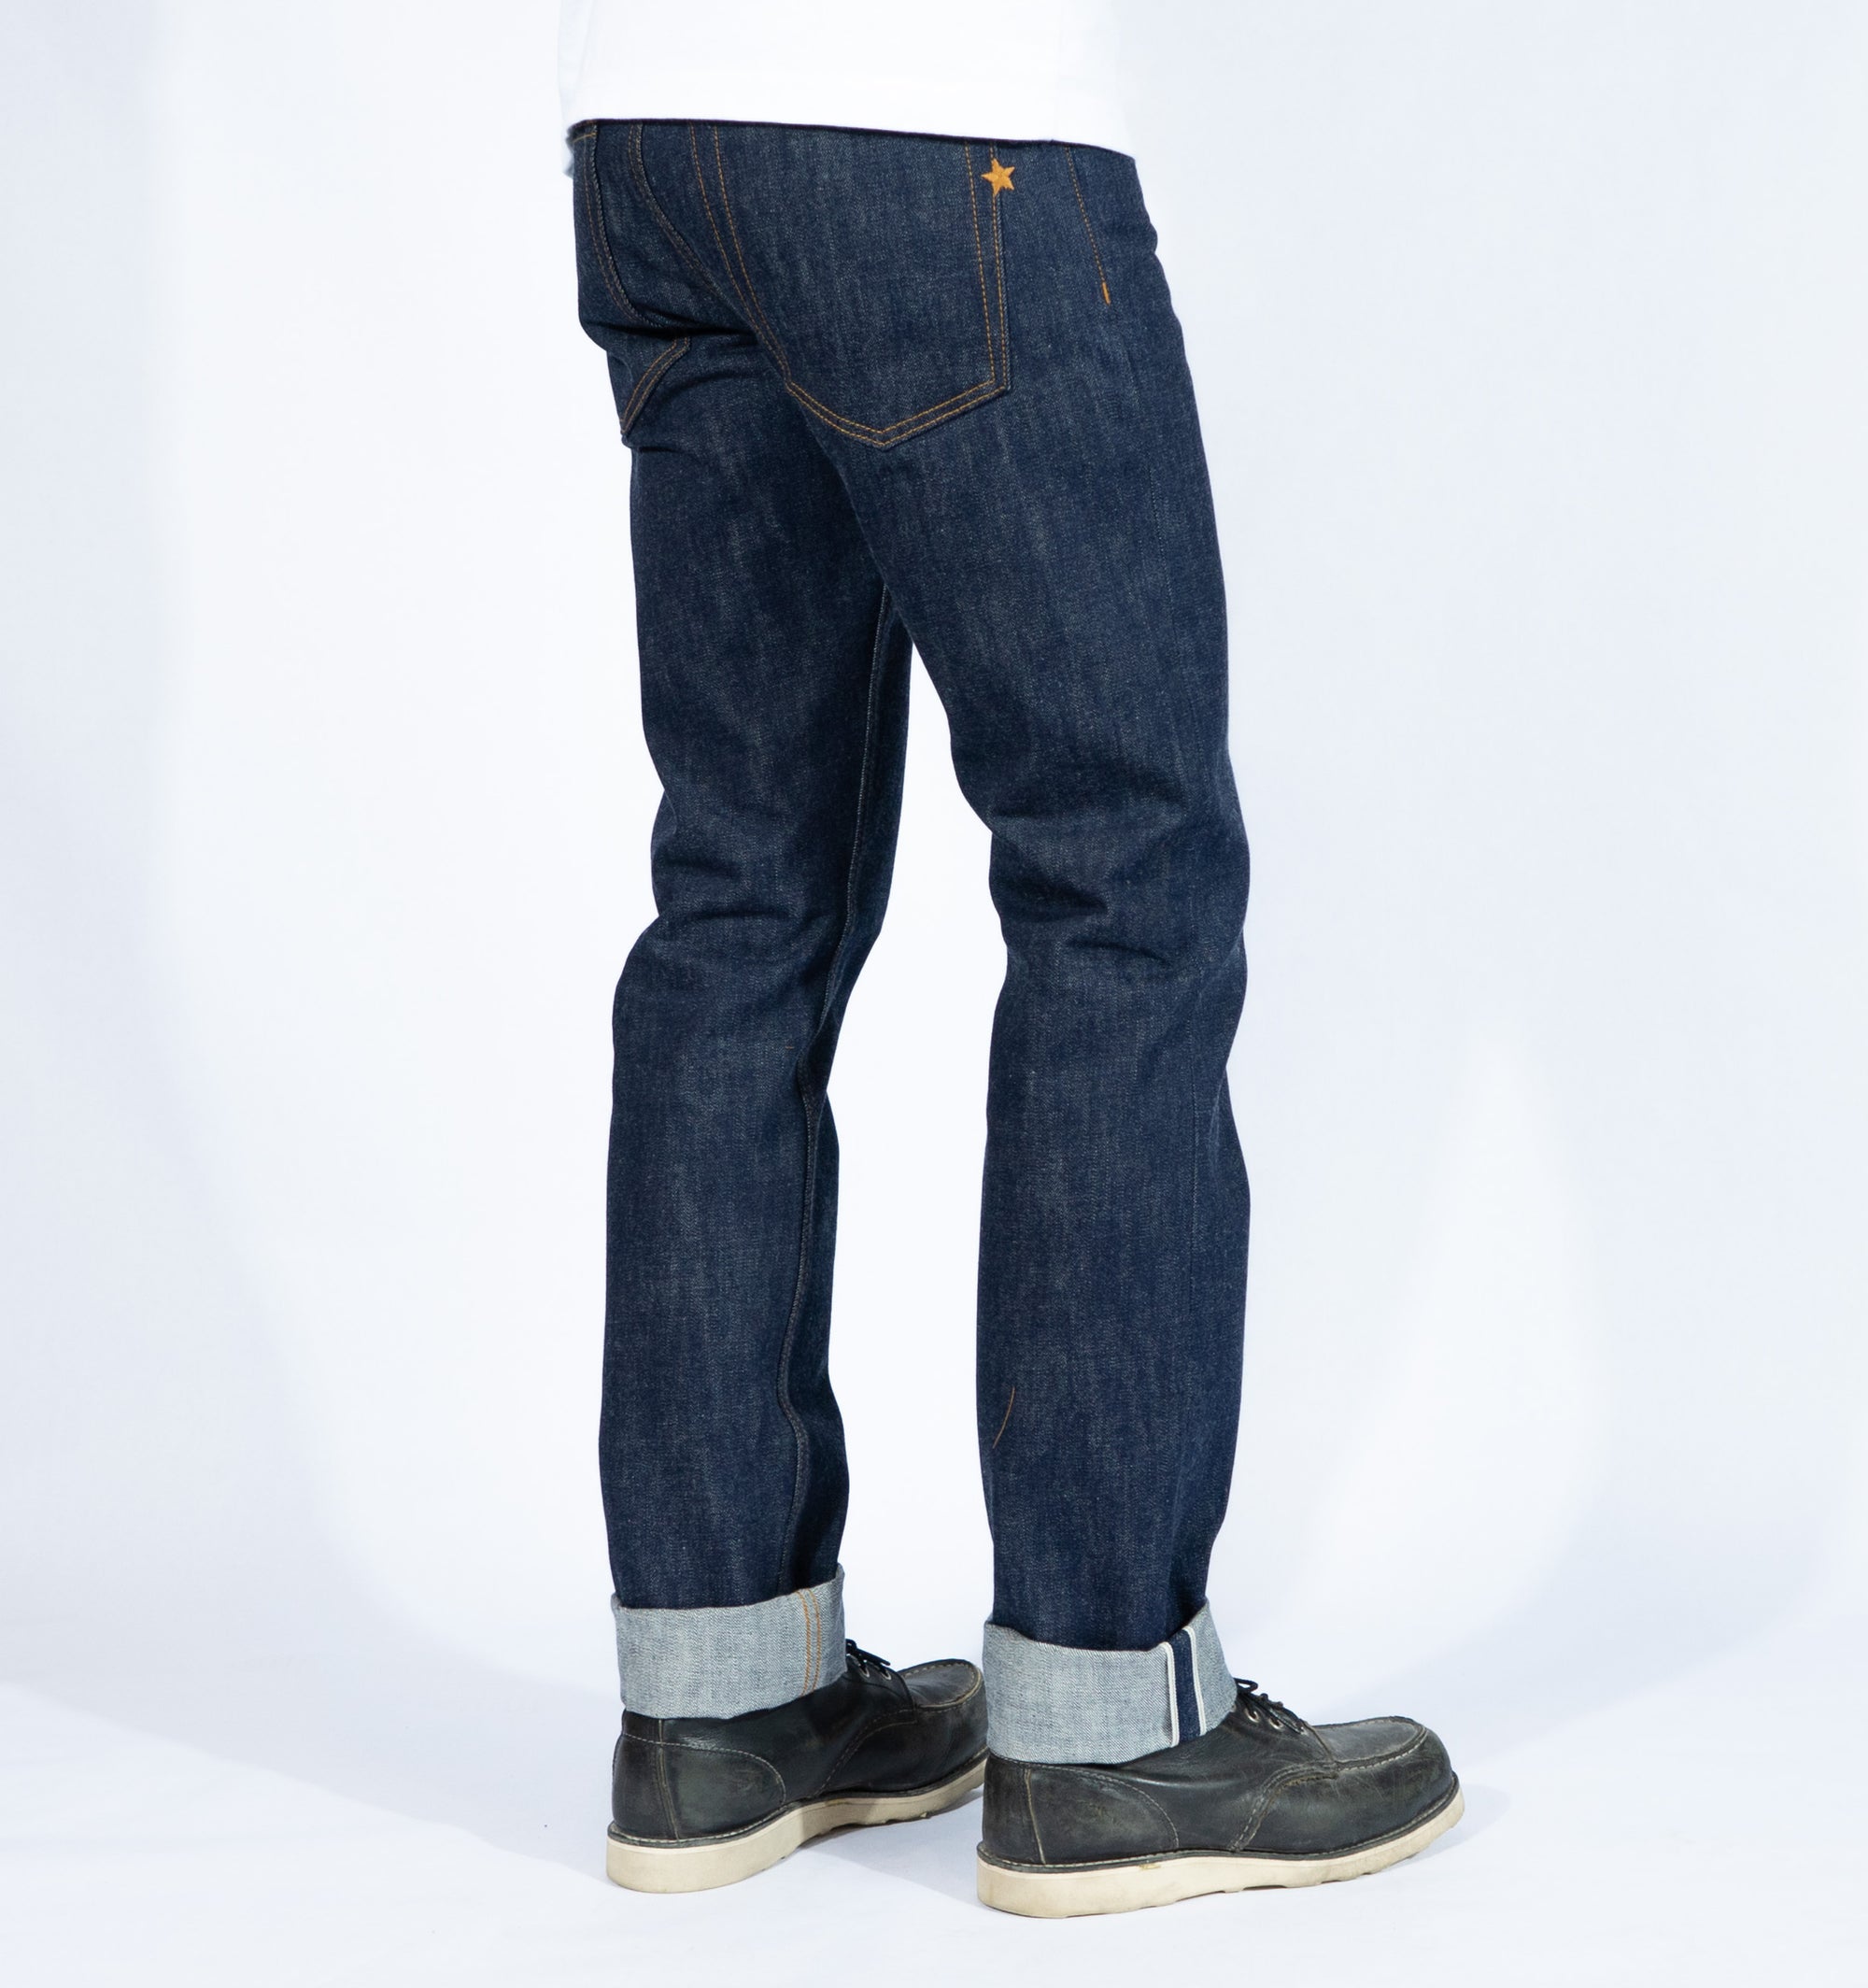 Brave Star Selvedge Jeans 27 oz. 36 x 30 HEAVY